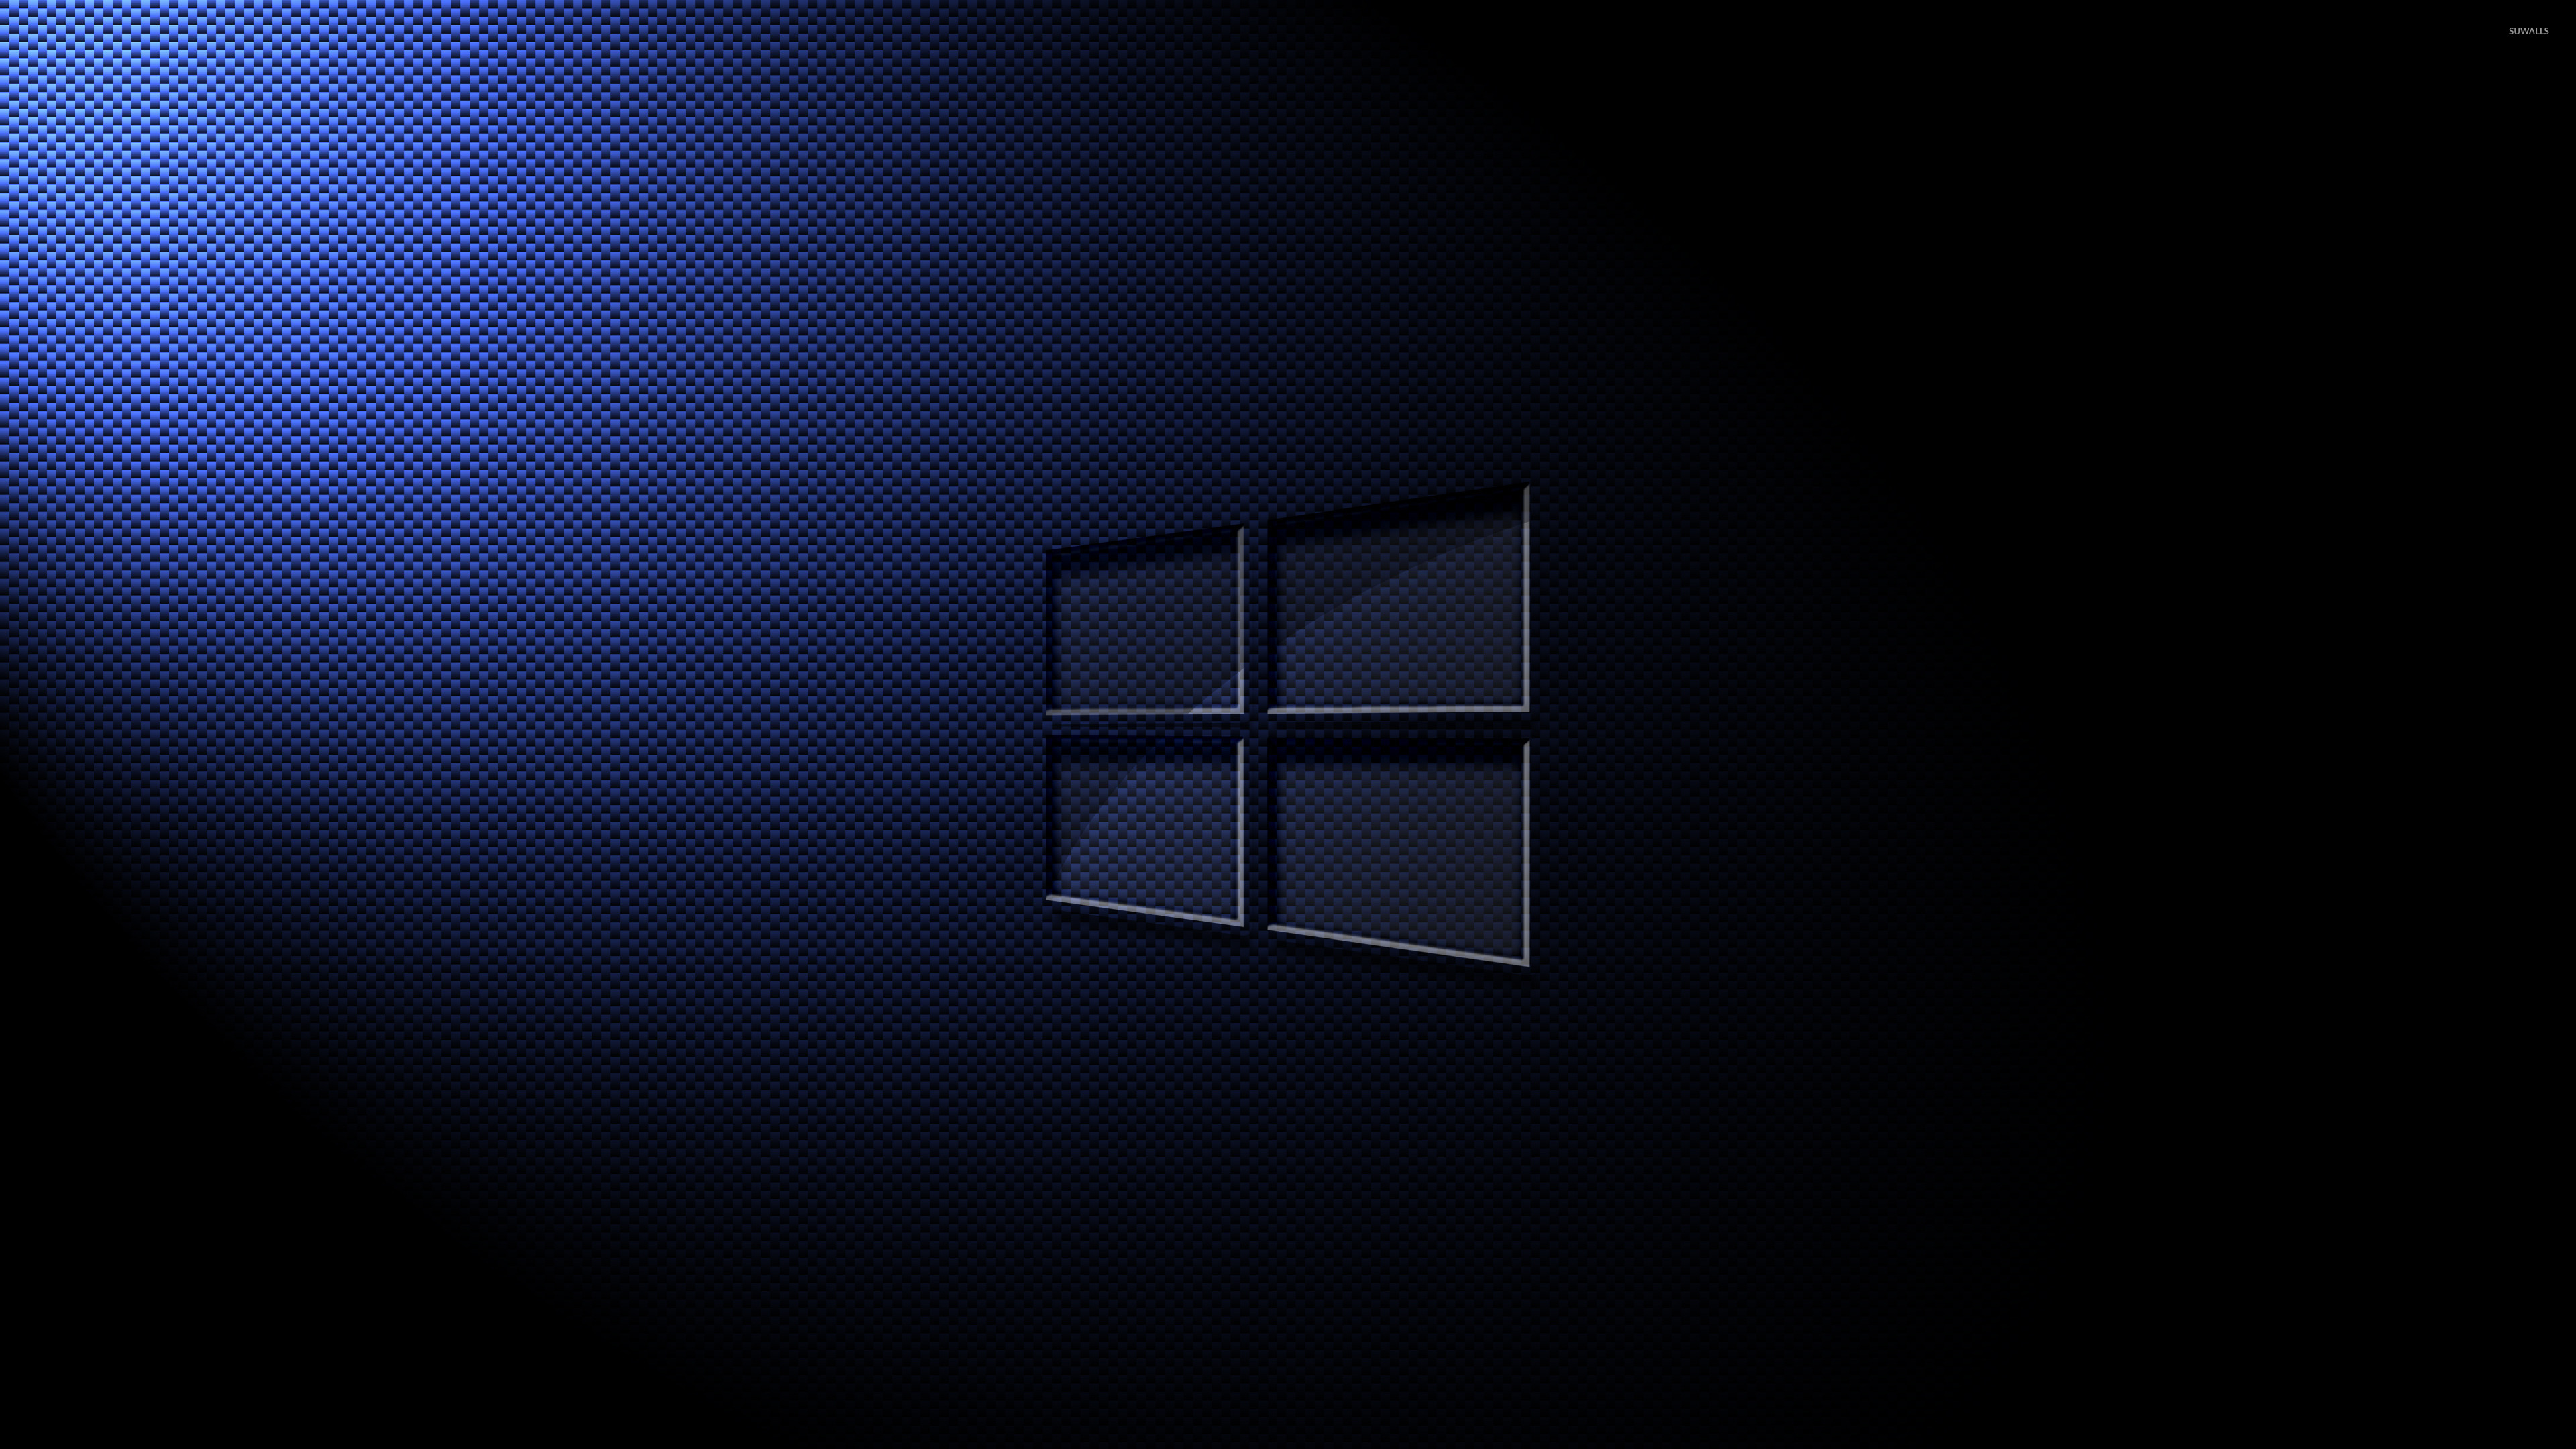 Glass Windows 10 on carbon fiber wallpaper - Computer wallpapers - #46529